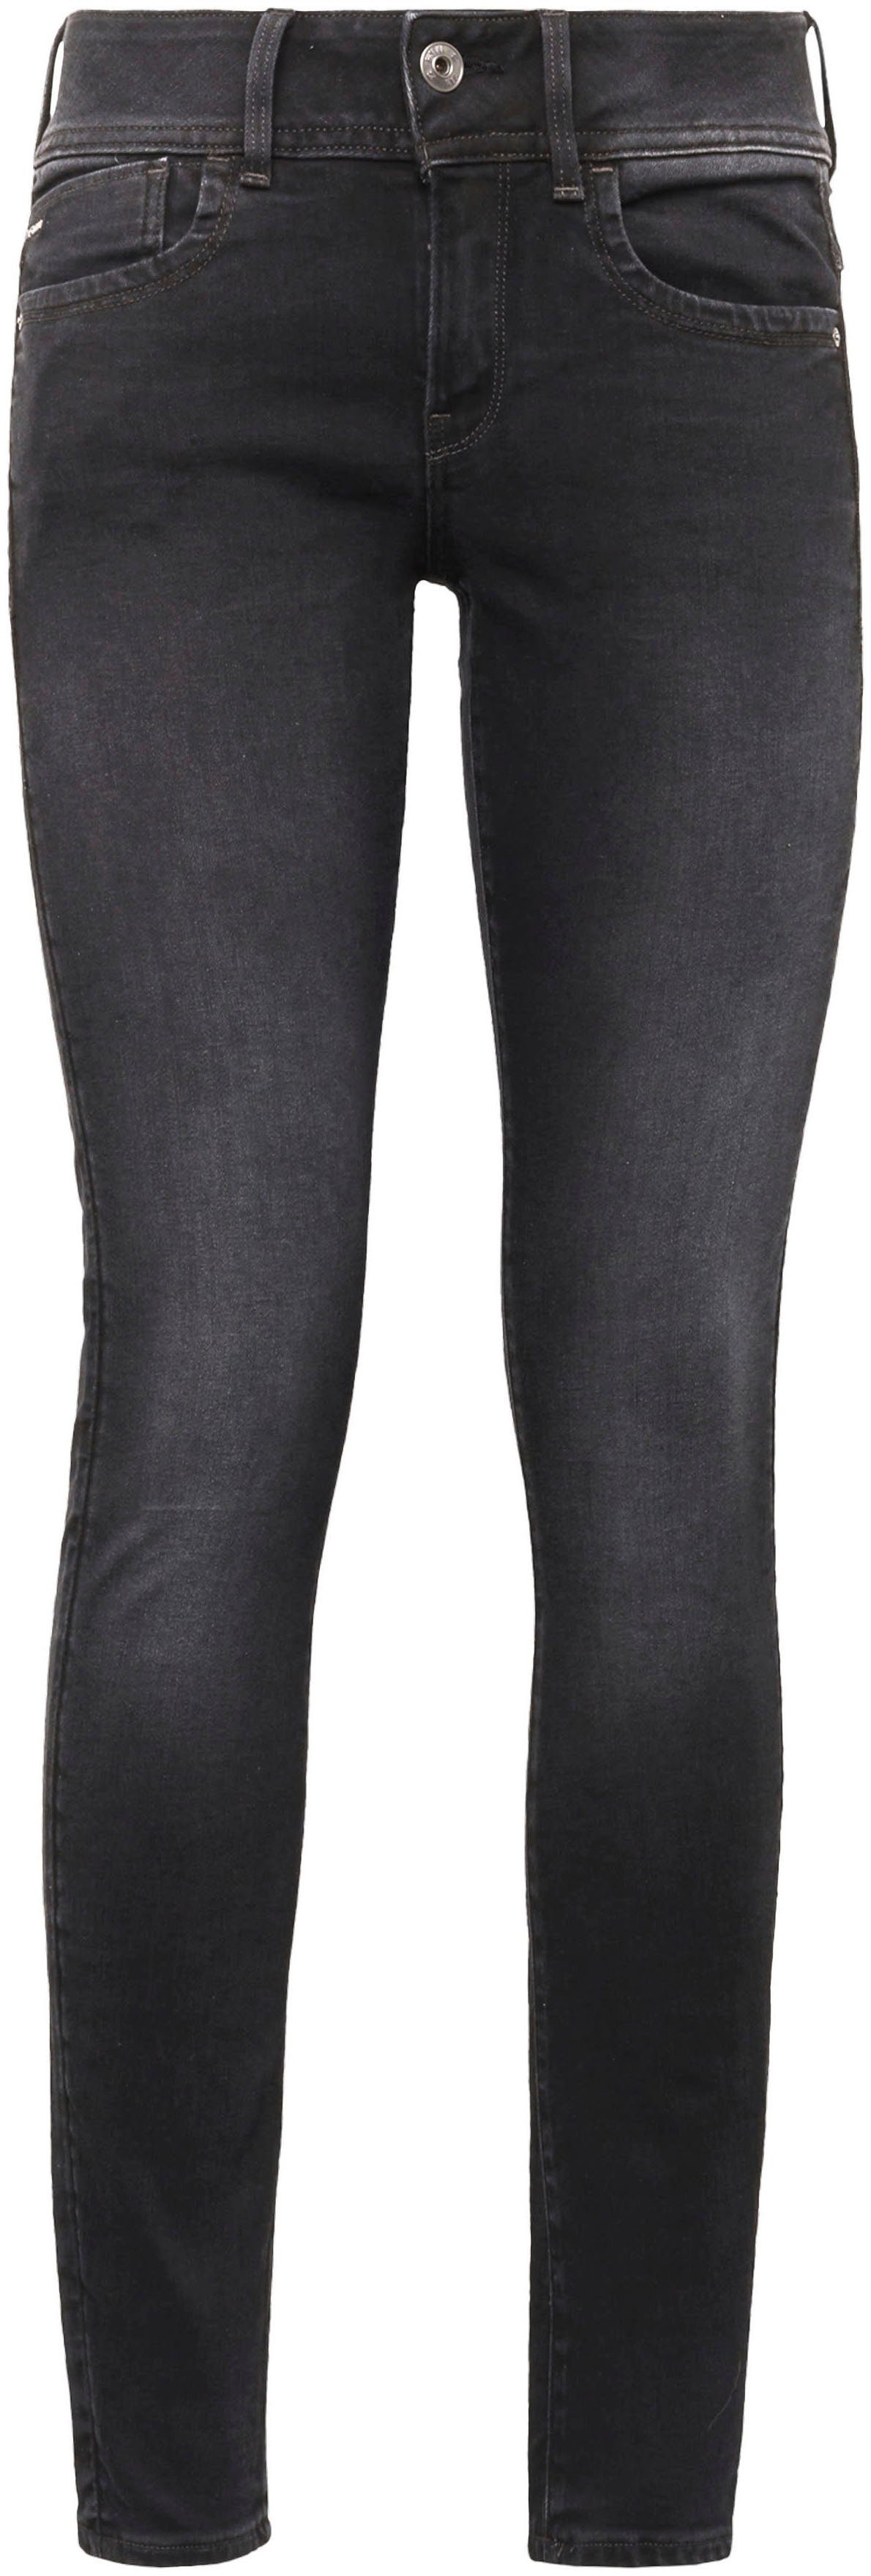 Mid Skinny Skinny jeans fit | RAW Lynn bij elastan-aandeel online met G-Star Waist OTTO